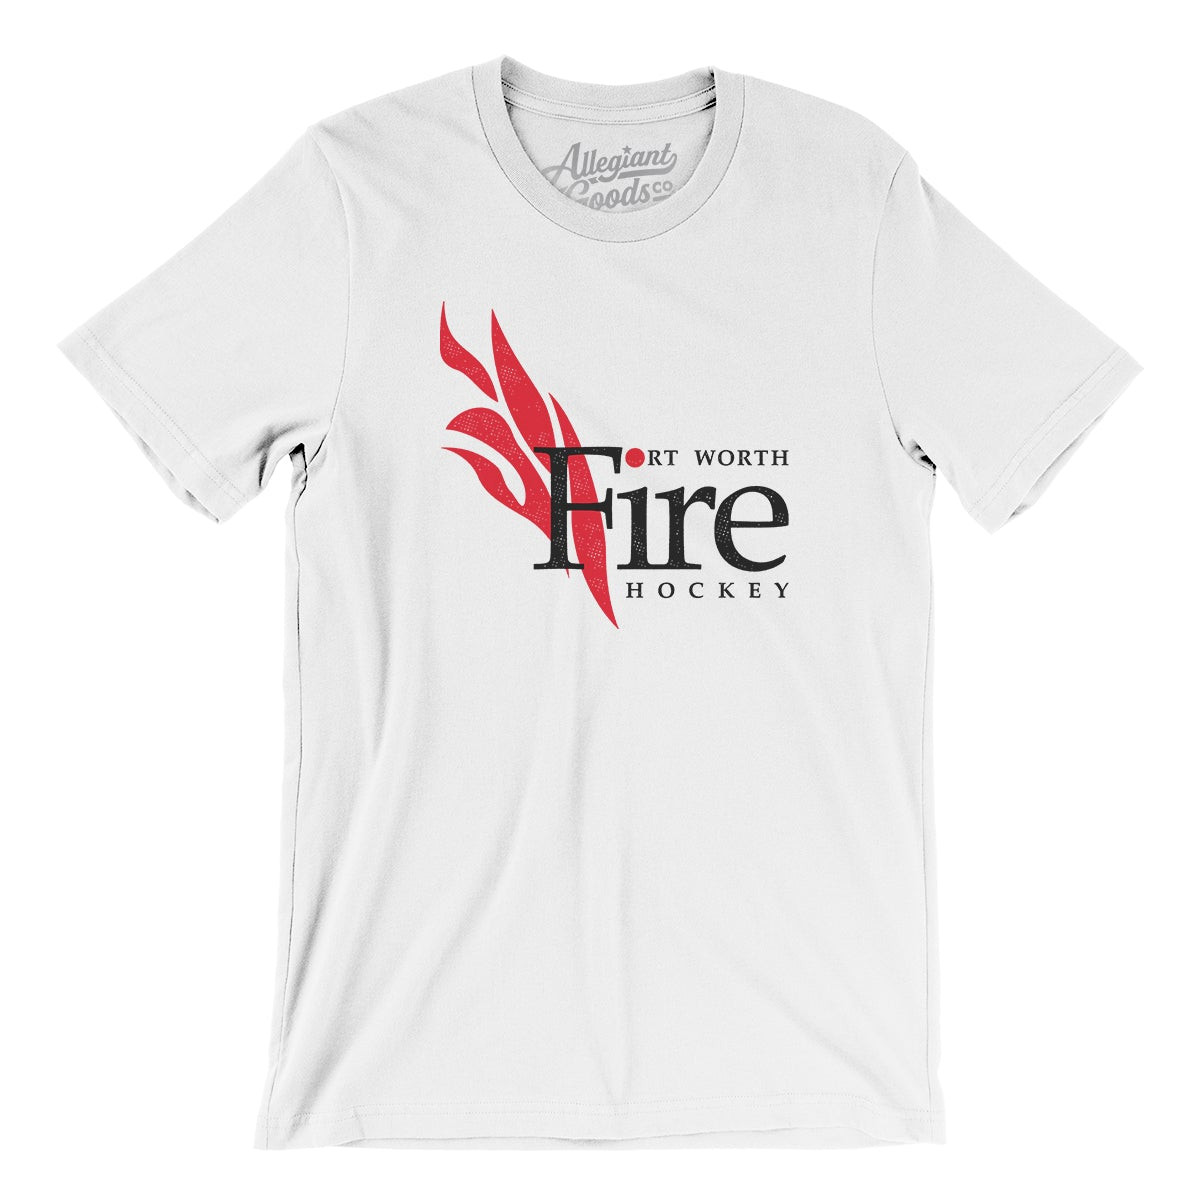 Fort Worth Fire Hockey Men/Unisex T-Shirt